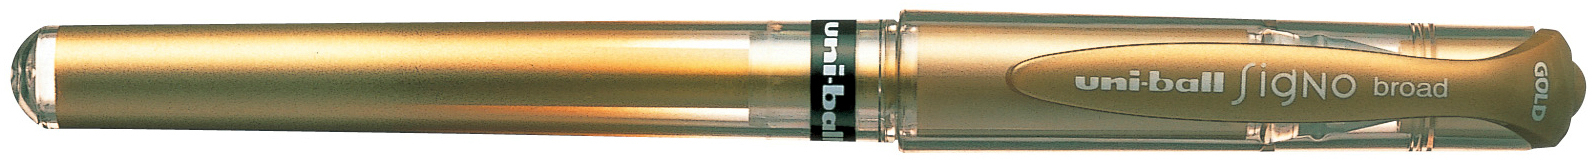 UNI-BALL Signo Broad 1mm UM-153 GOLD or